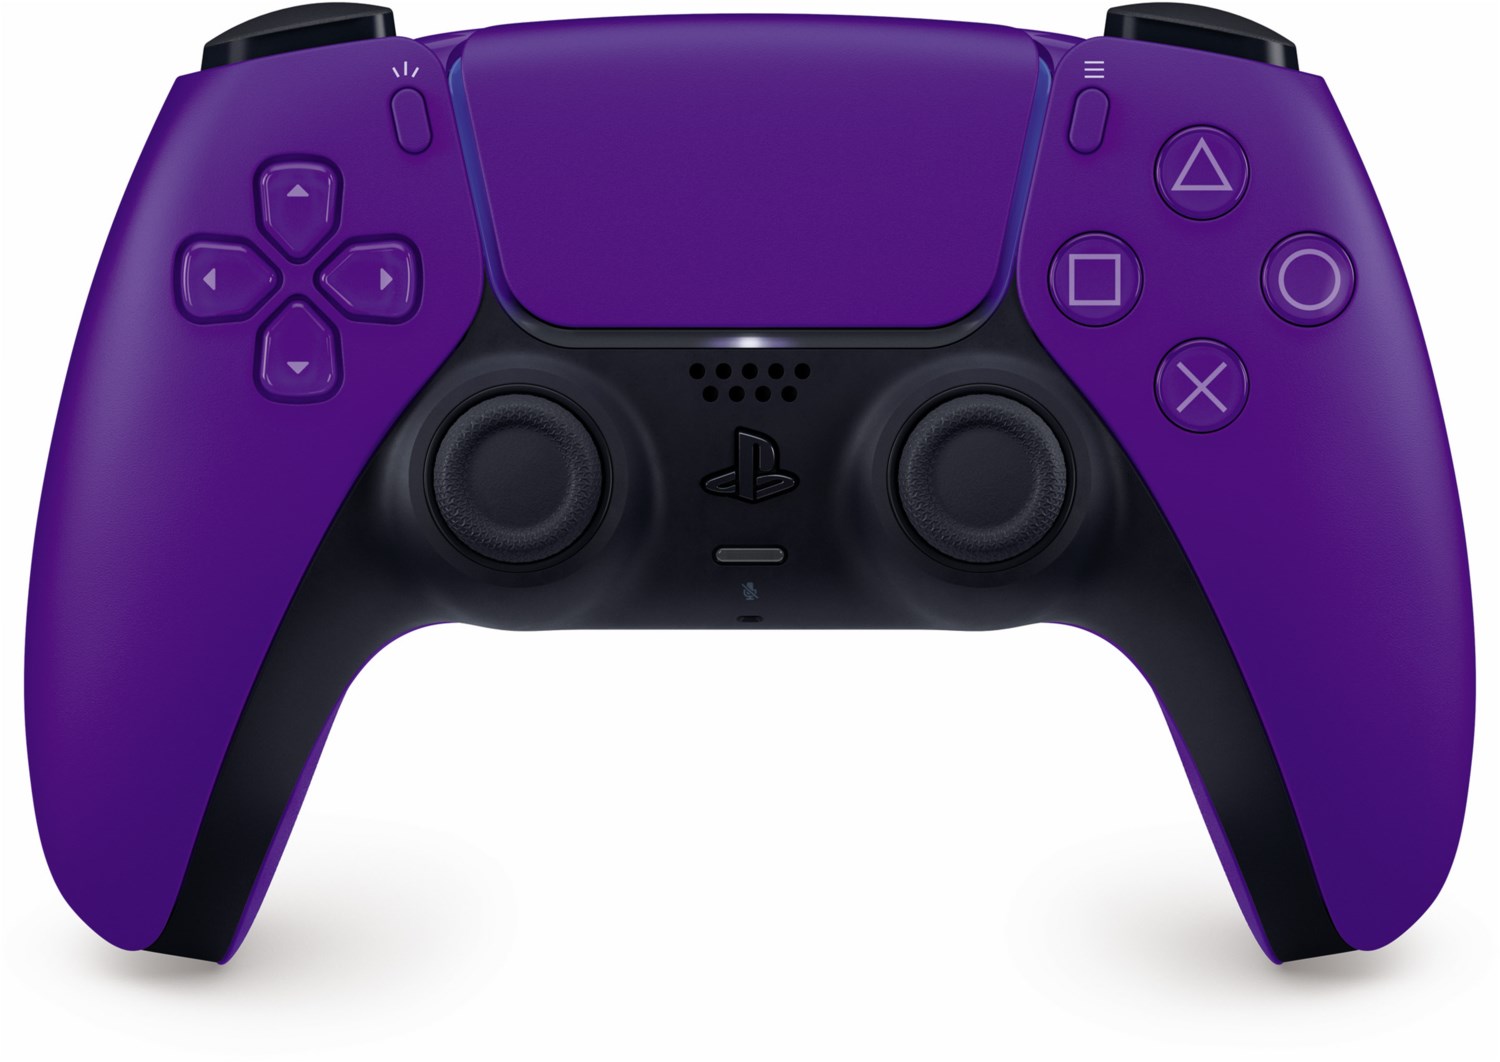 DualSense Wireless-Controller für PlayStation 5 galactic purple